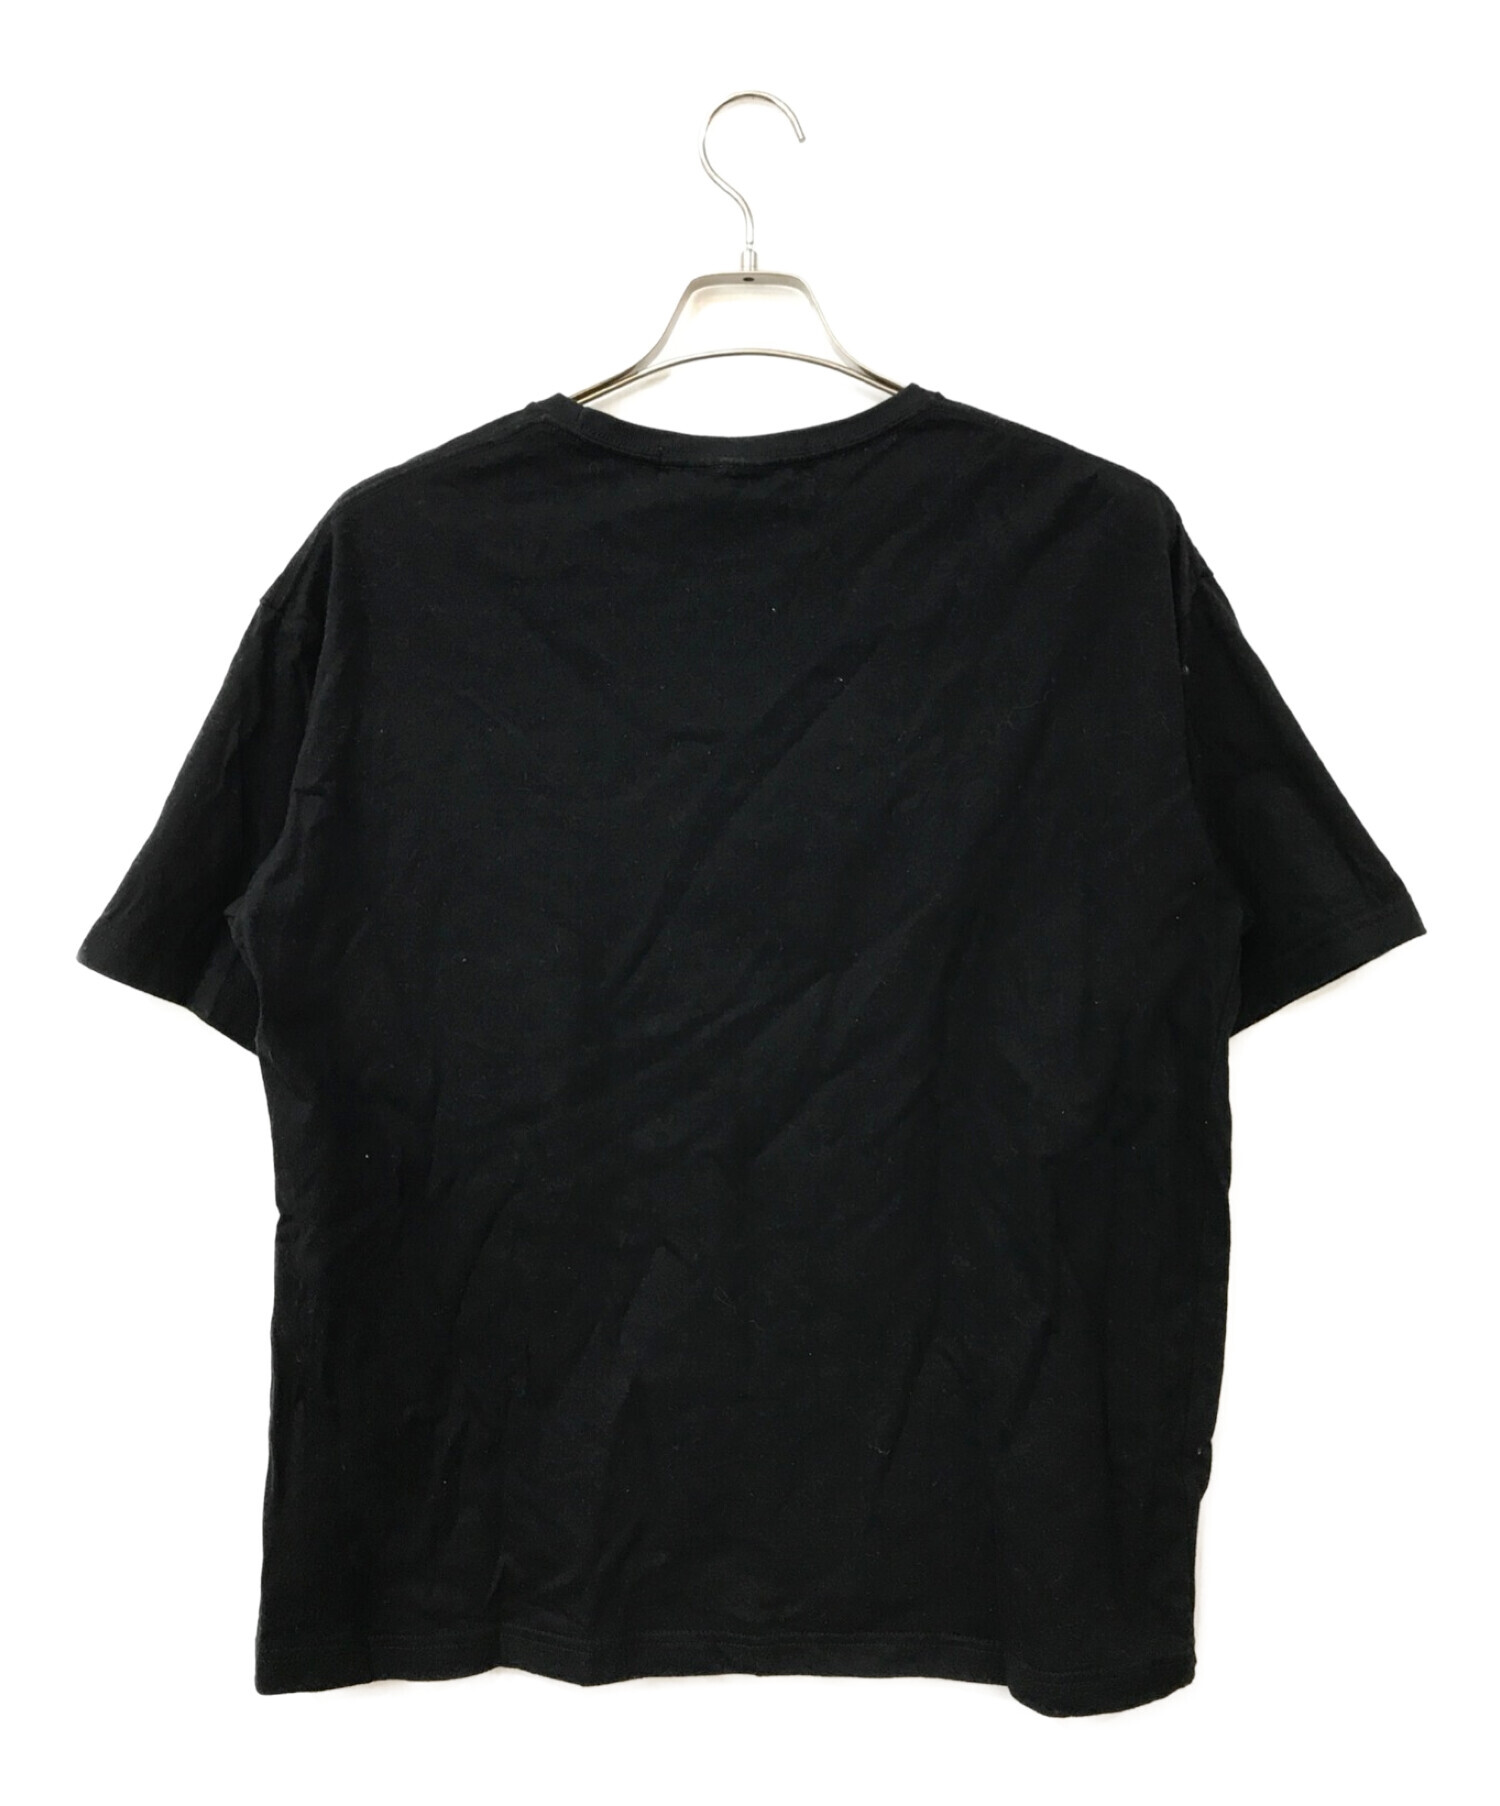 GROUND Y (グラウンドワイ) 5.6oz cotton Jersey Painted Big T-Shirt ブラック サイズ:2(M相当)